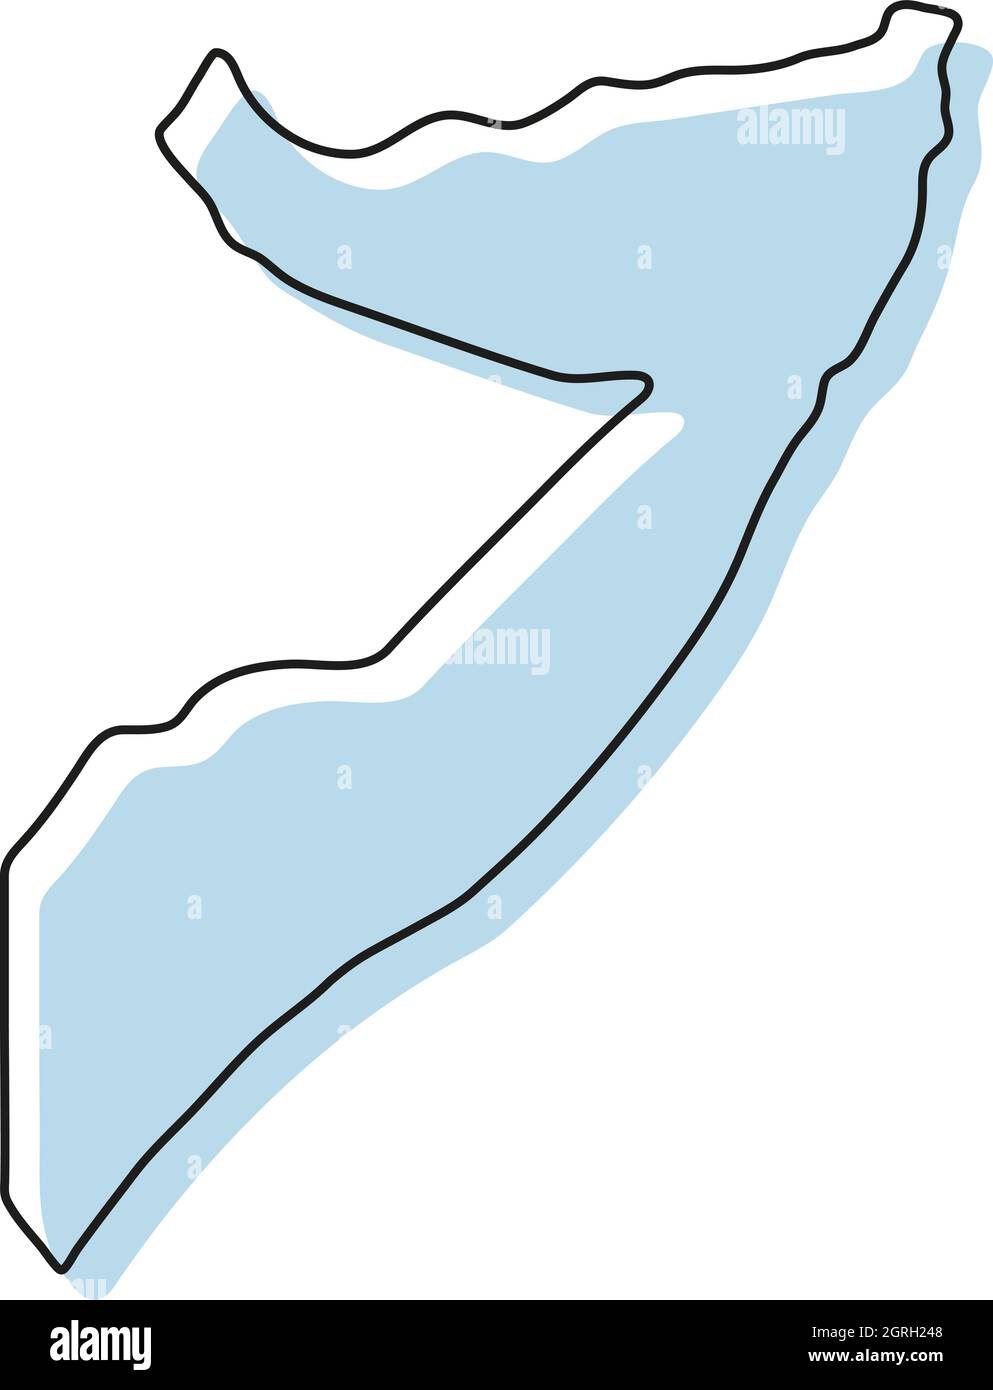 Stylized Simple Outline Map Of Somalia Icon Blue Sketch Map Of Somalia